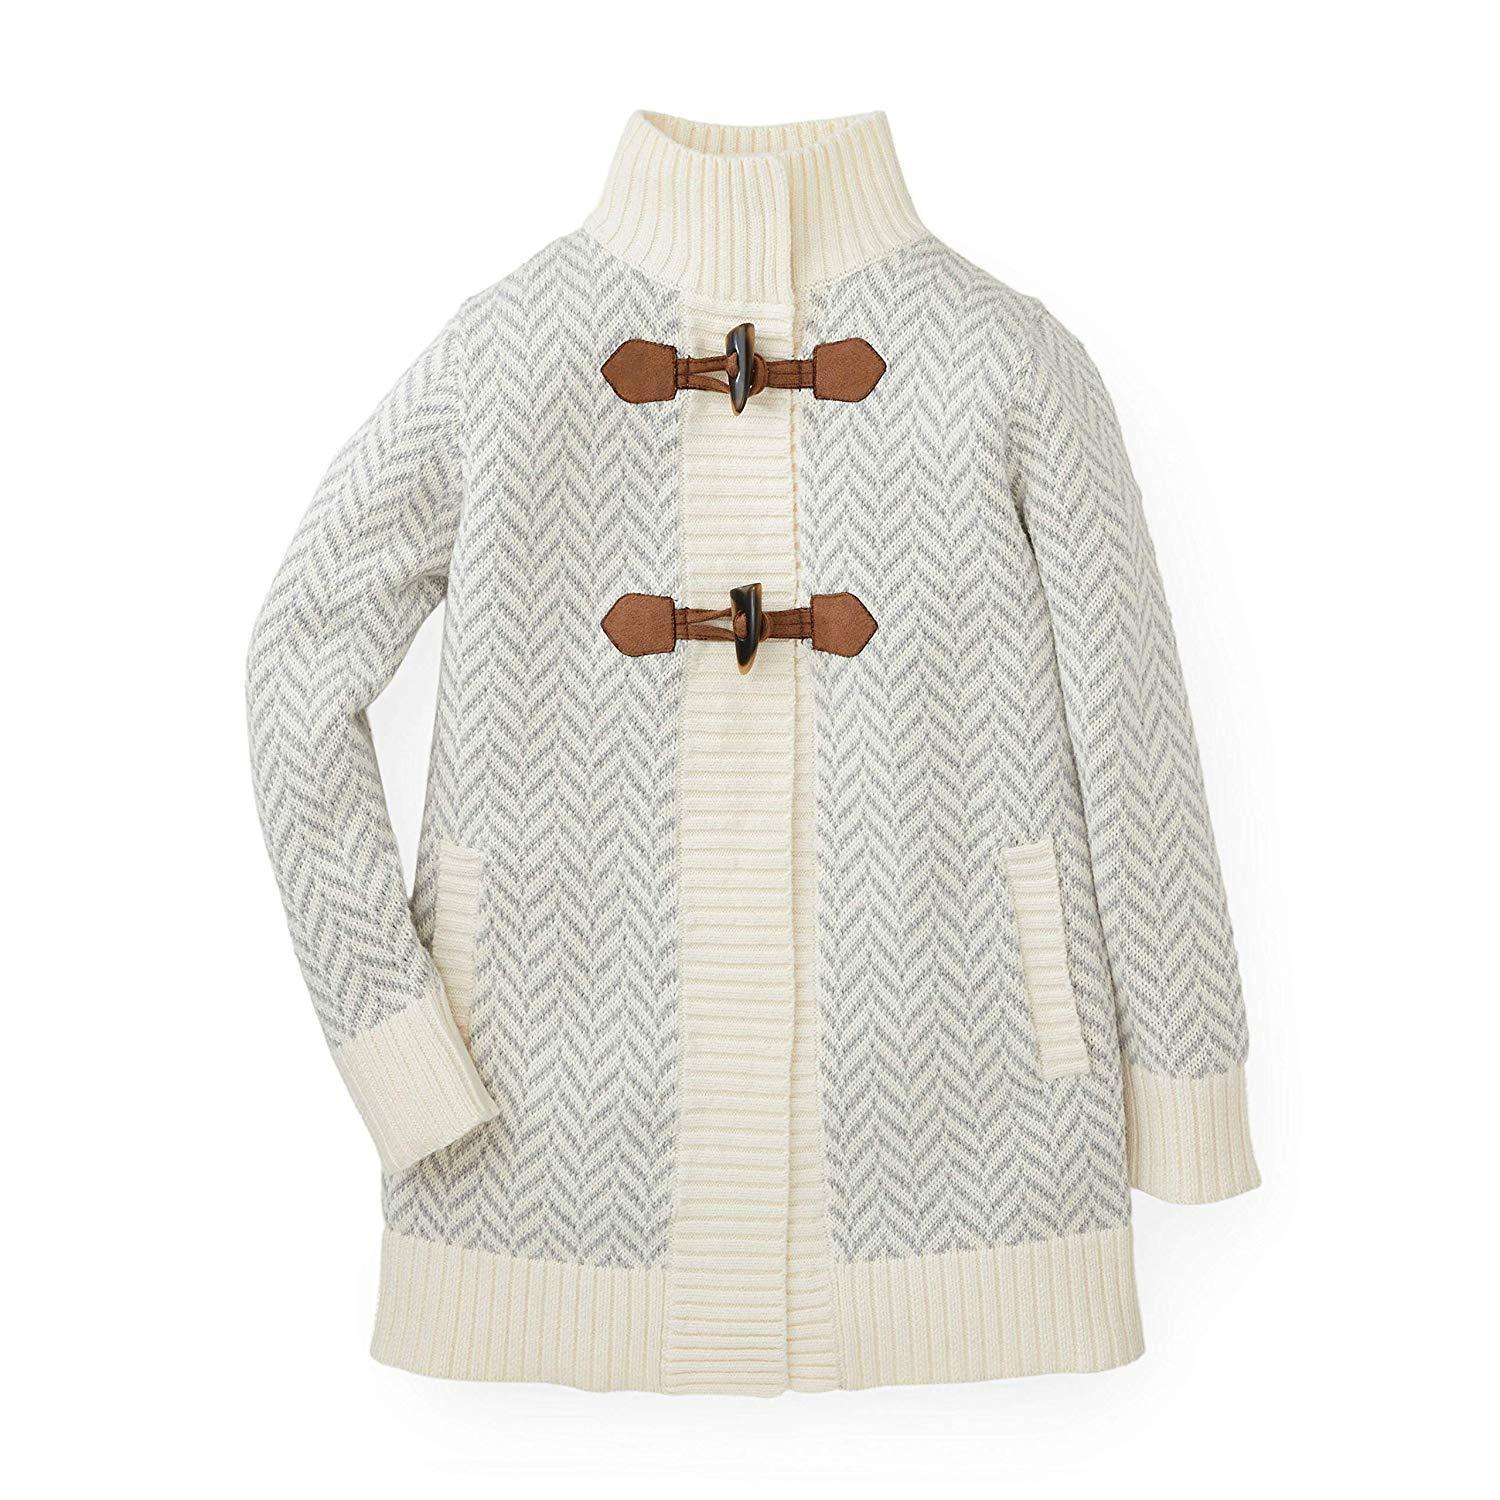 Hope /& Henry Girls/' Long Sleeve Fancy Cardigan Sweater with Stripe Trim